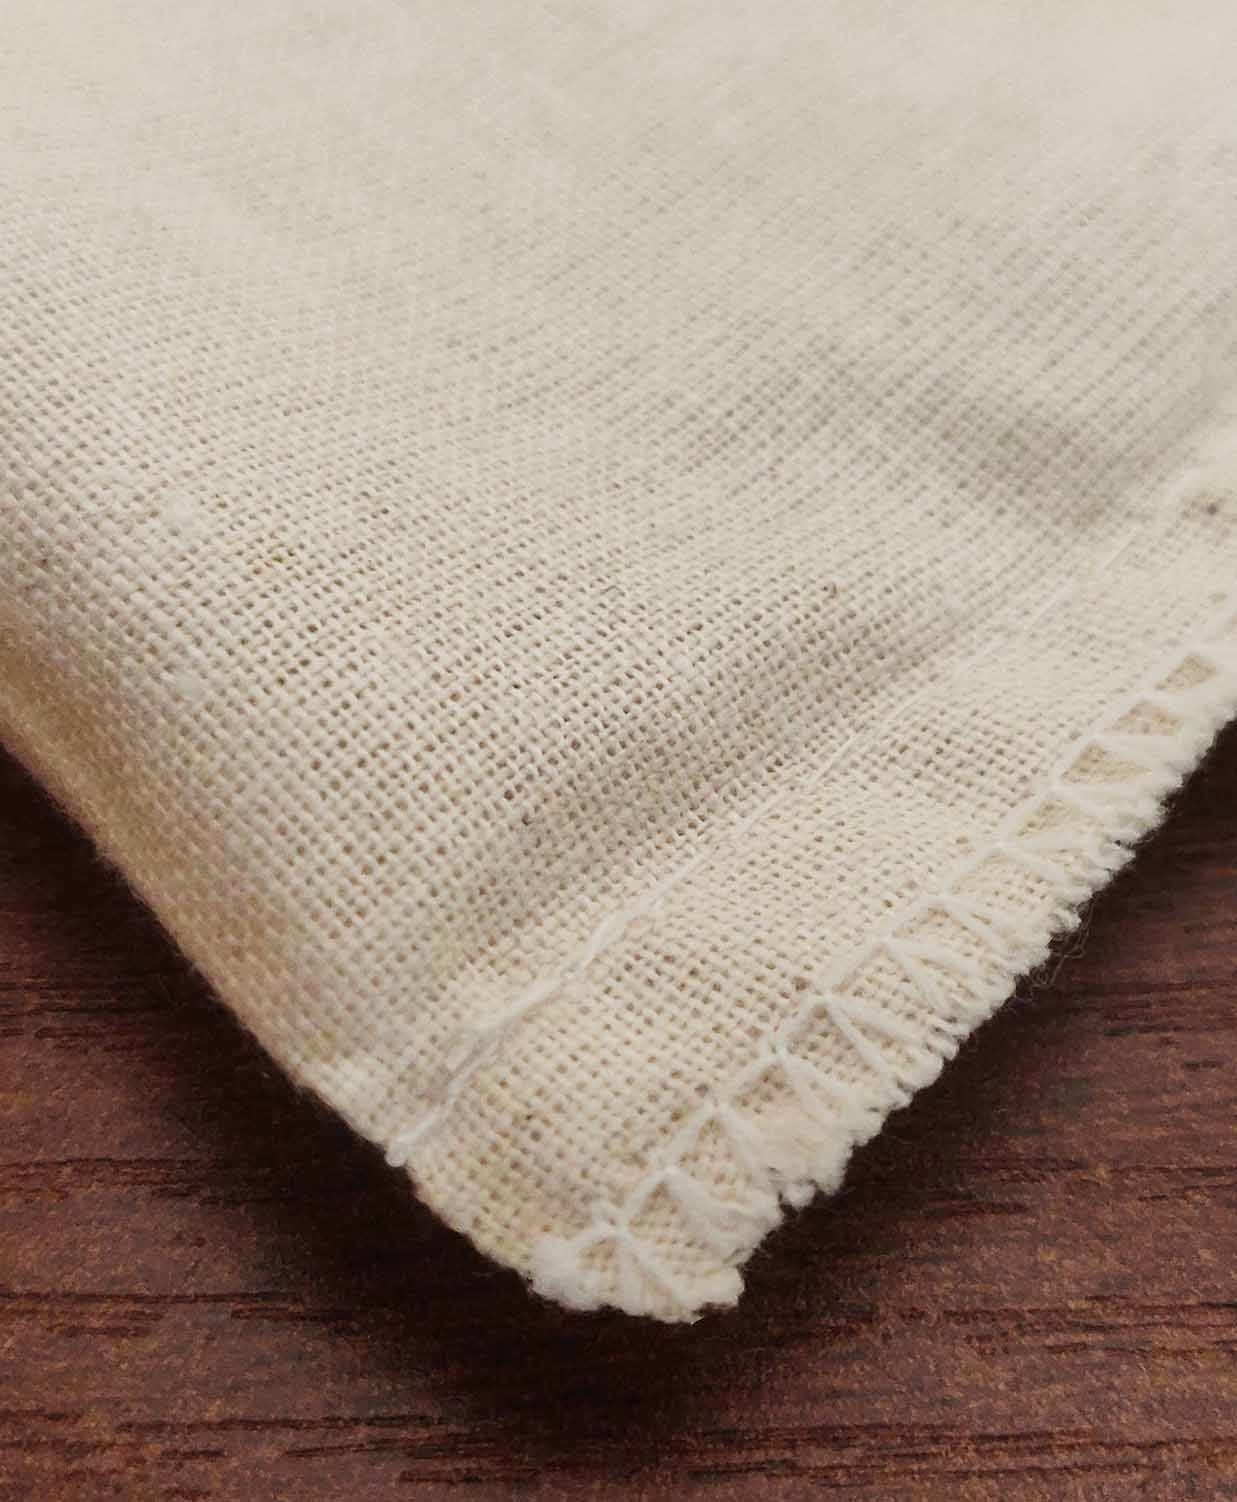 Pure cotton muslin drawstring straining bags